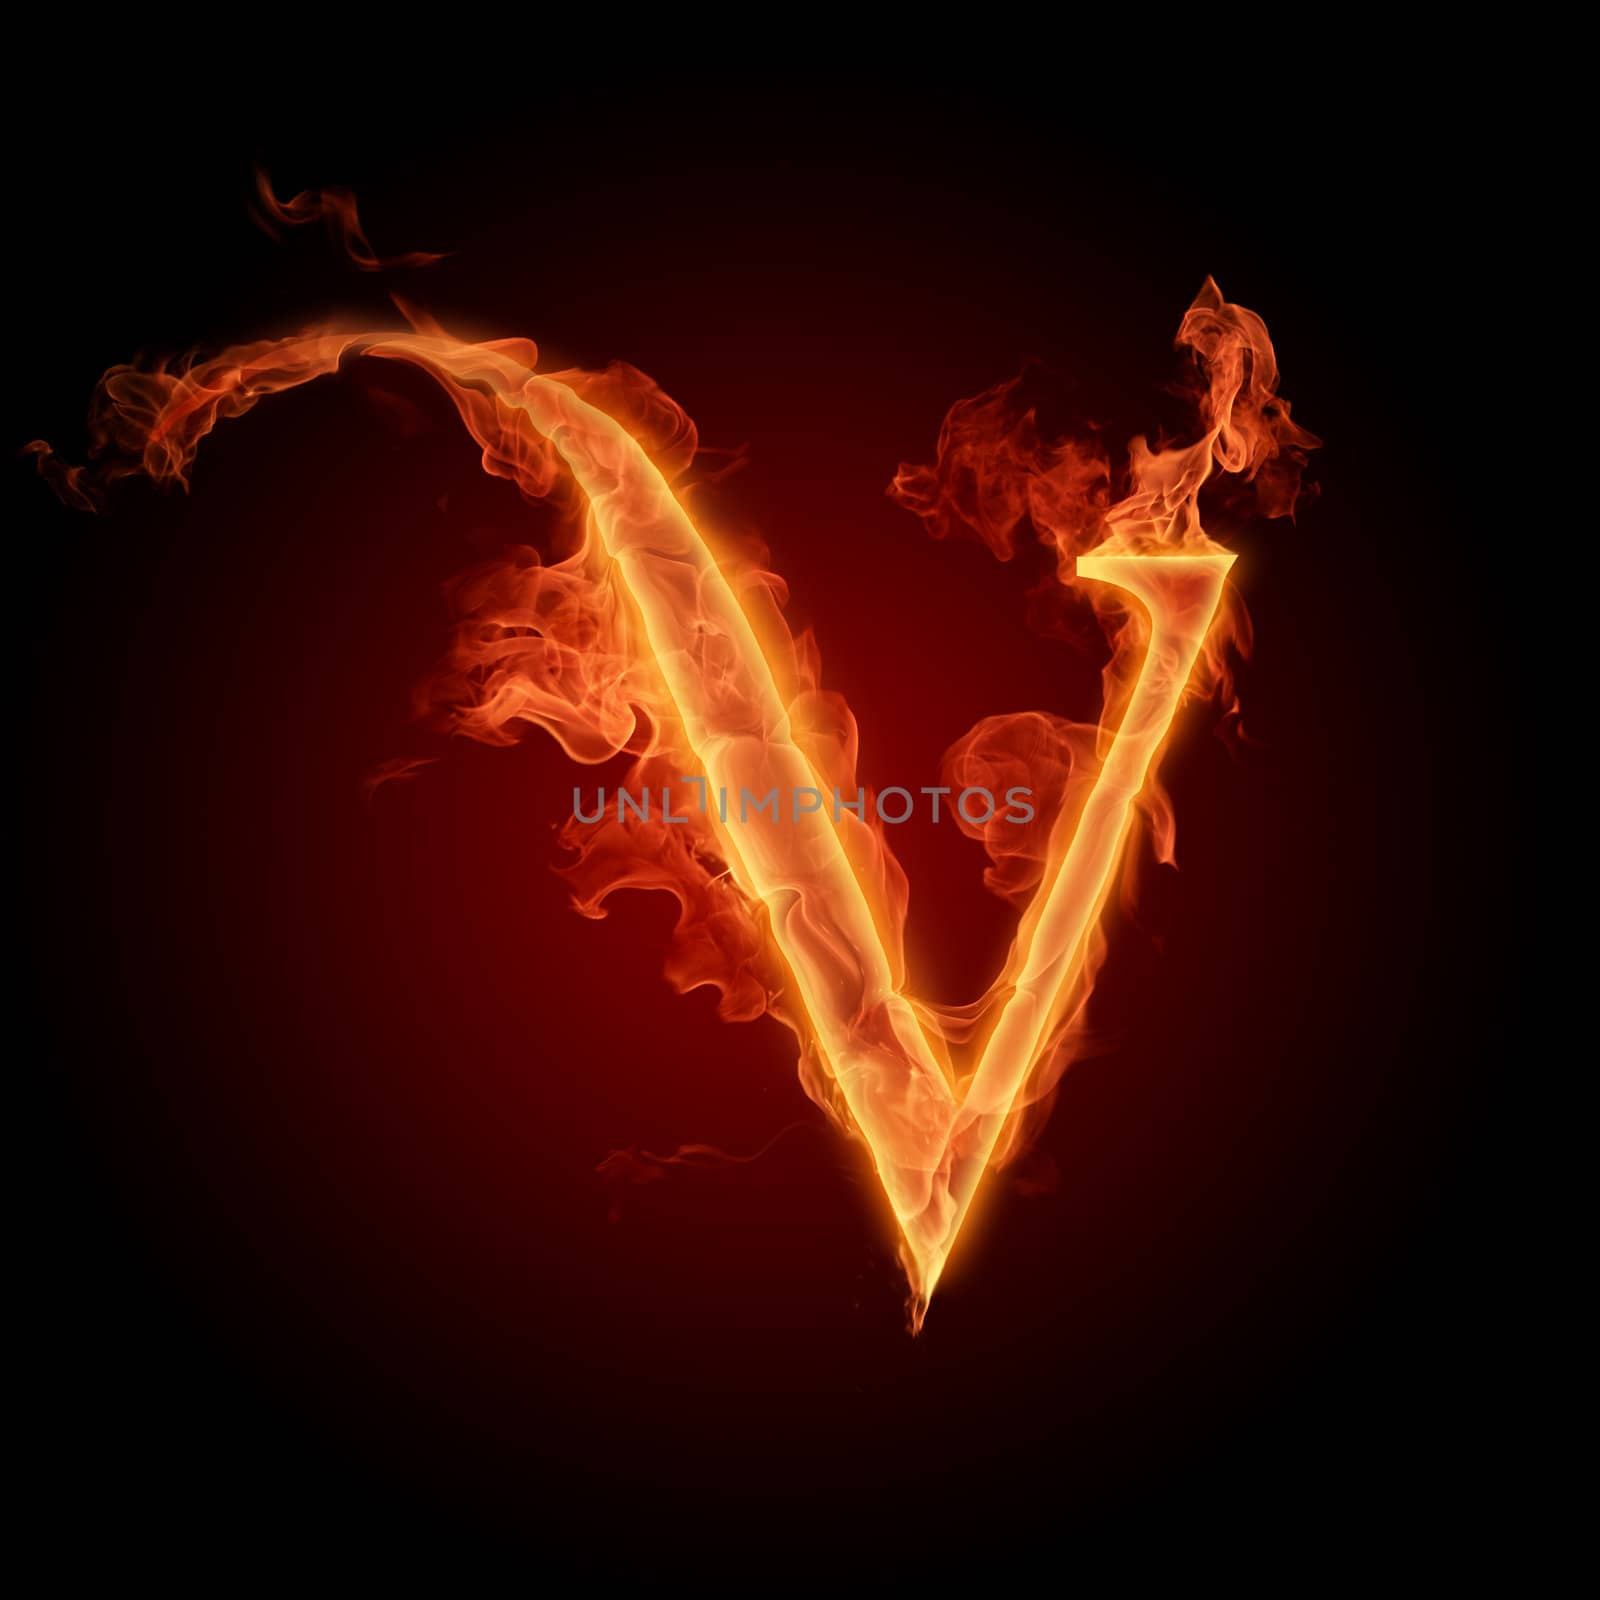 Burning Letter V